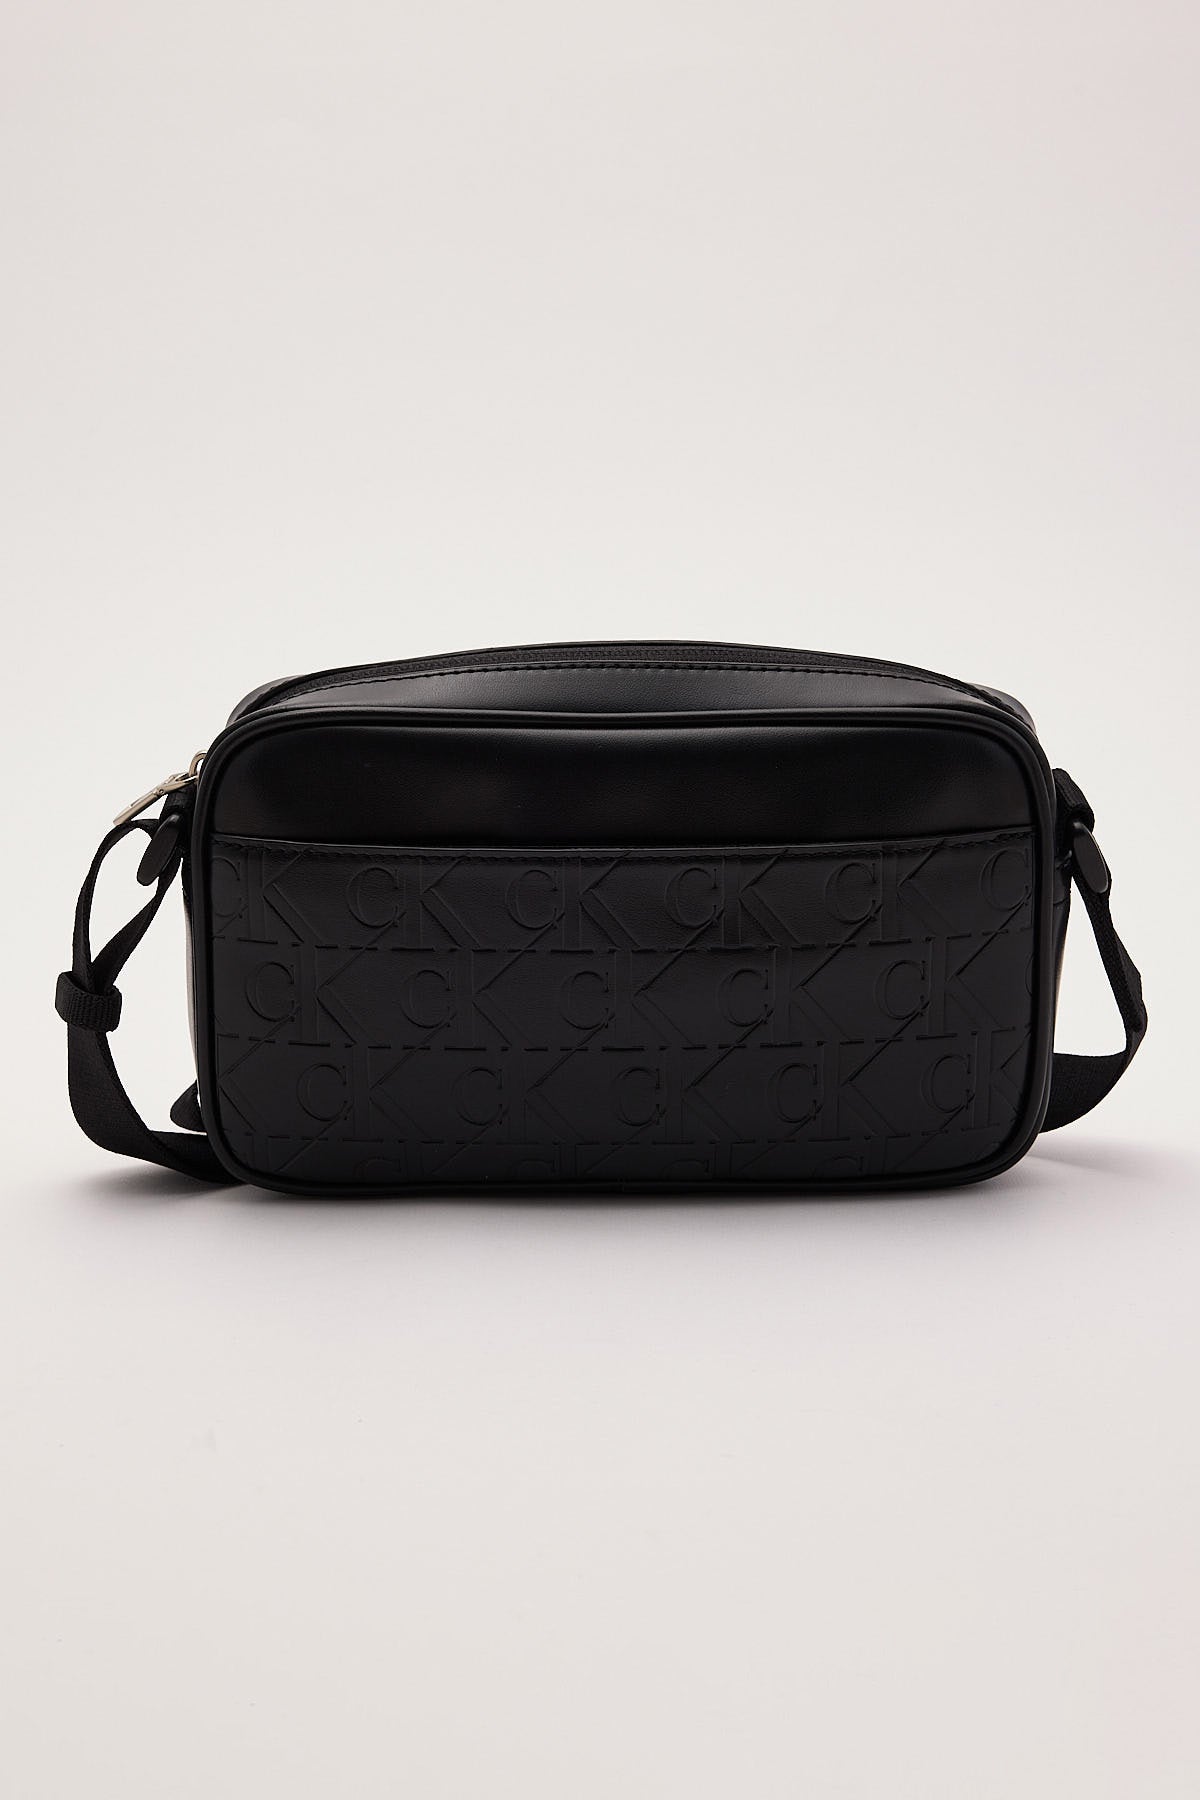 Calvin Klein Monogram Soft Camera Bag Black